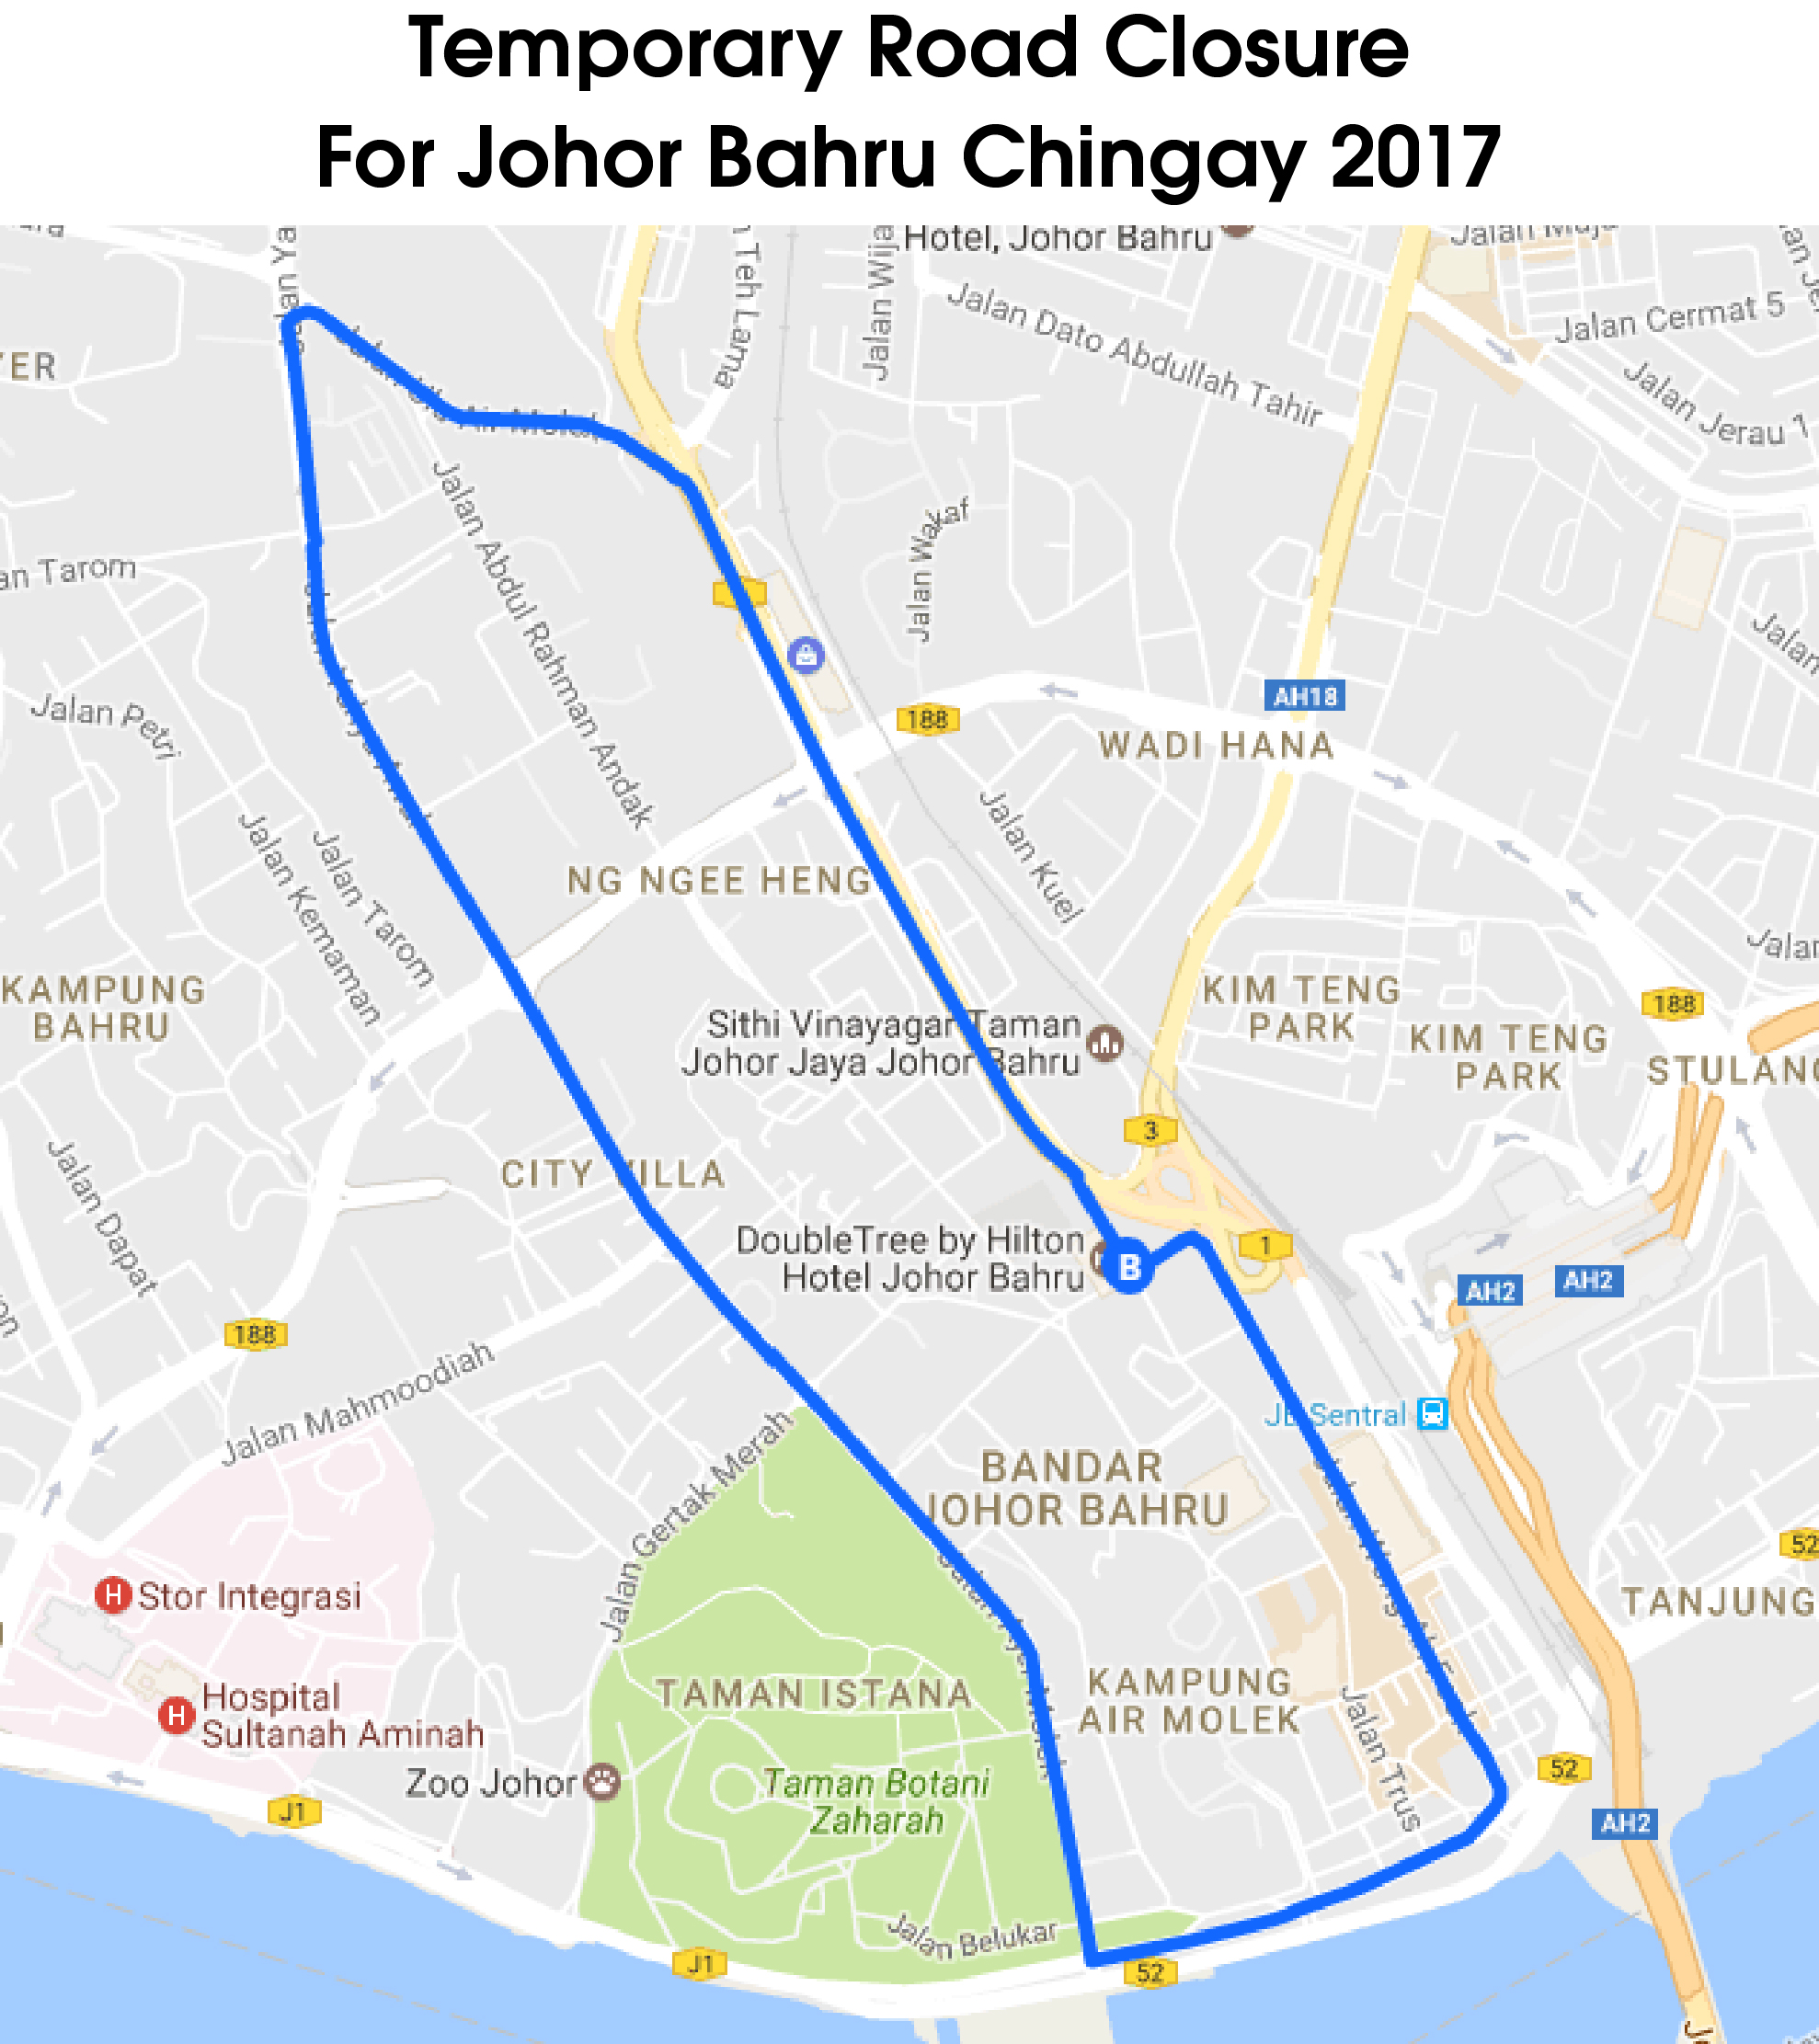 Affected roads during Johor Bahru Chingay 2017